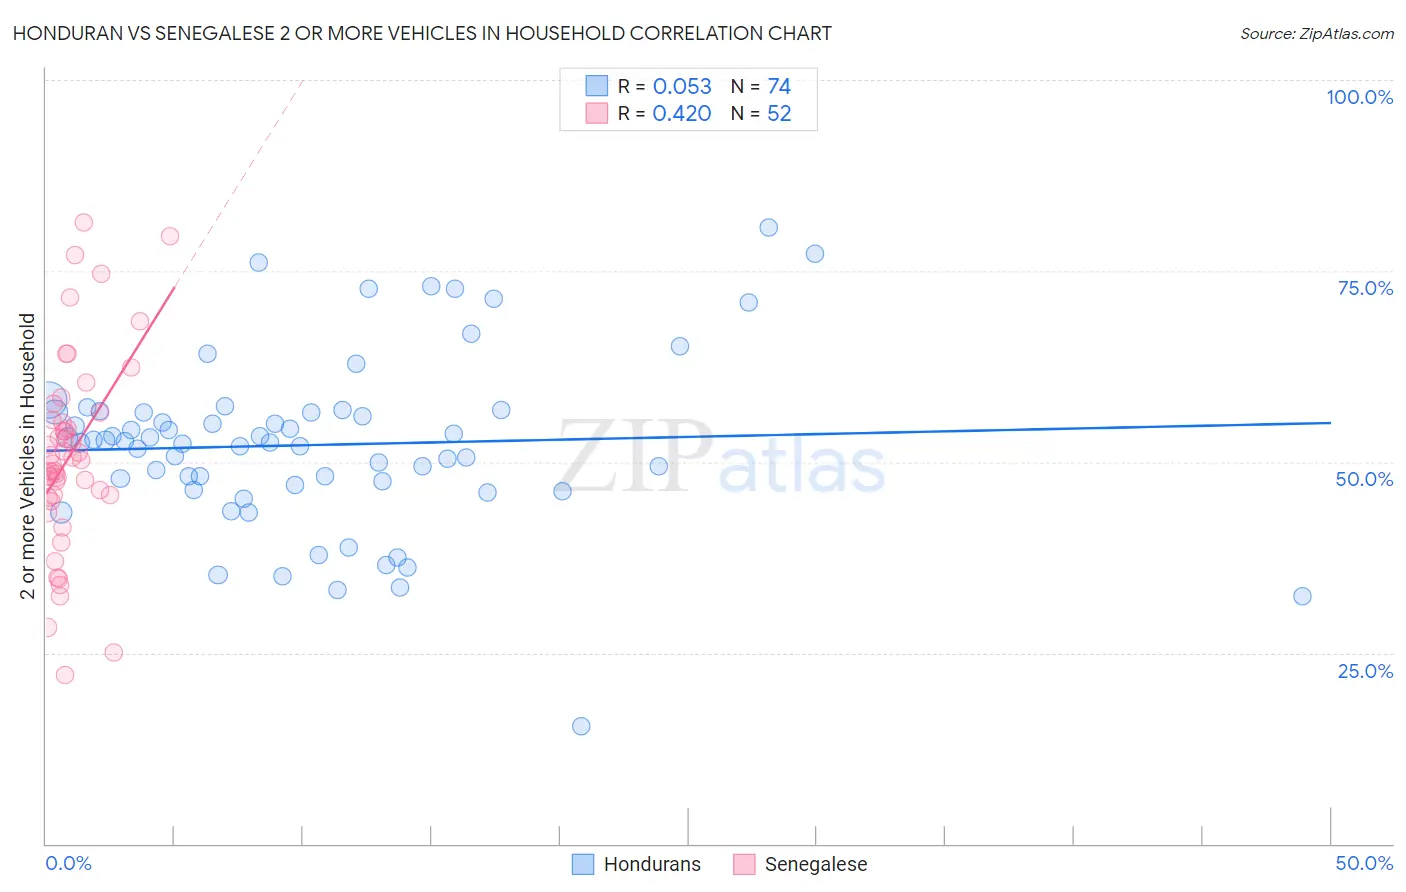 Honduran vs Senegalese 2 or more Vehicles in Household